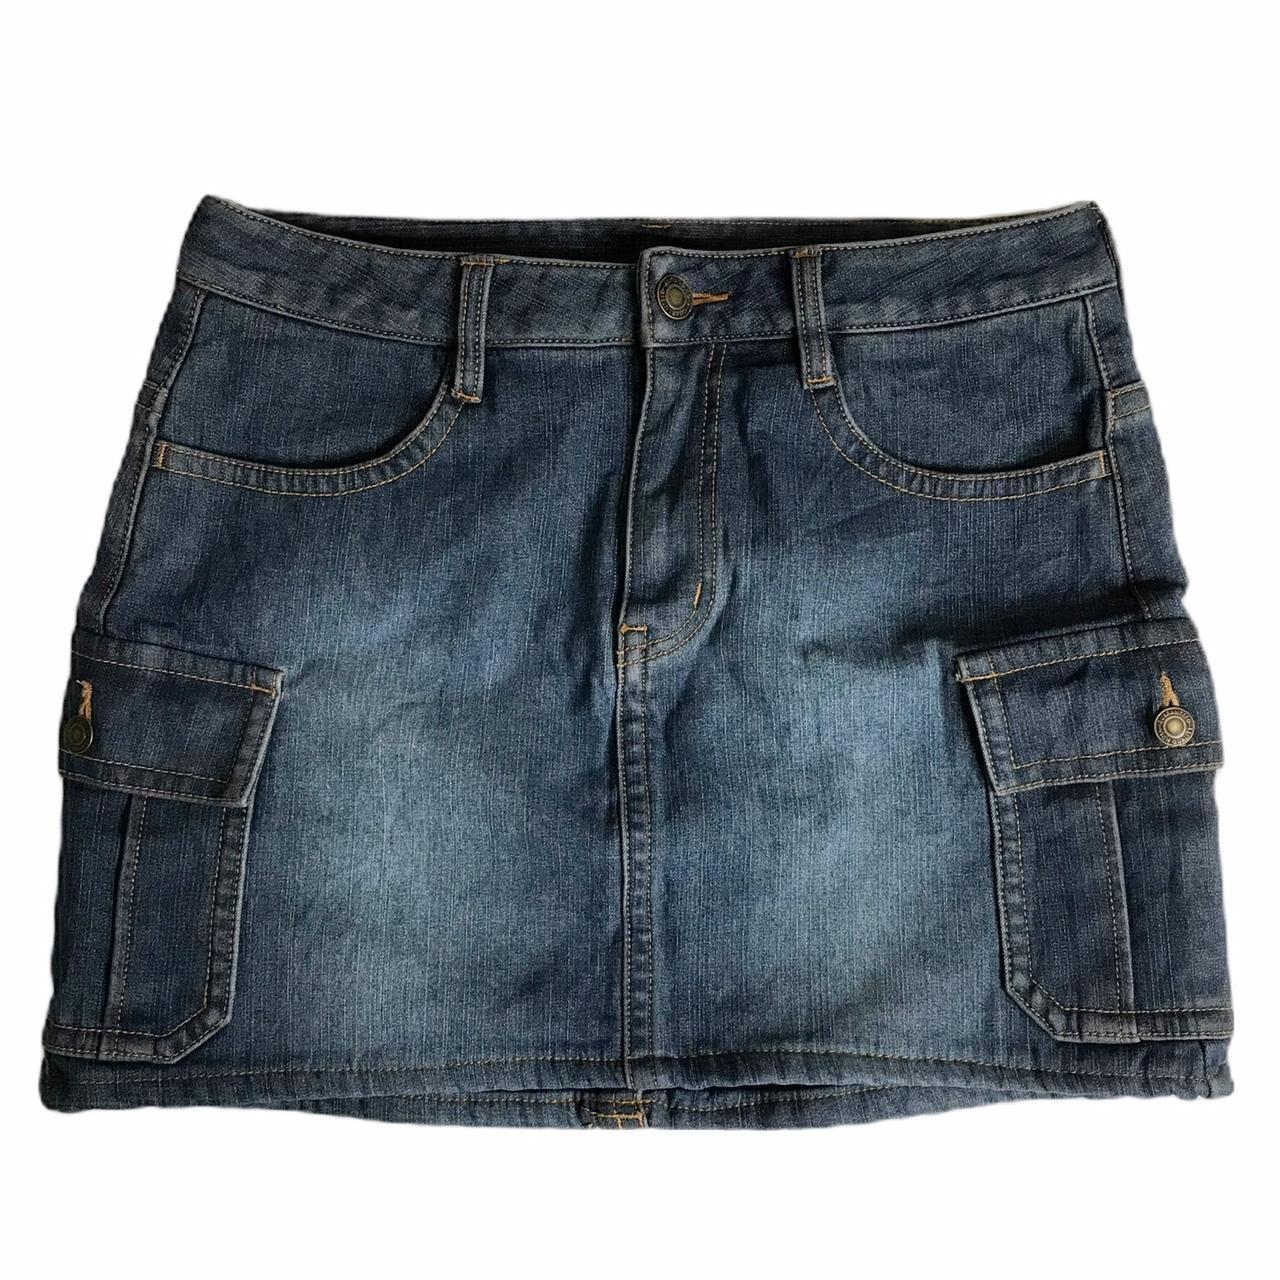 Navy blue y2k denim cargo mini skirt. Features... - Depop